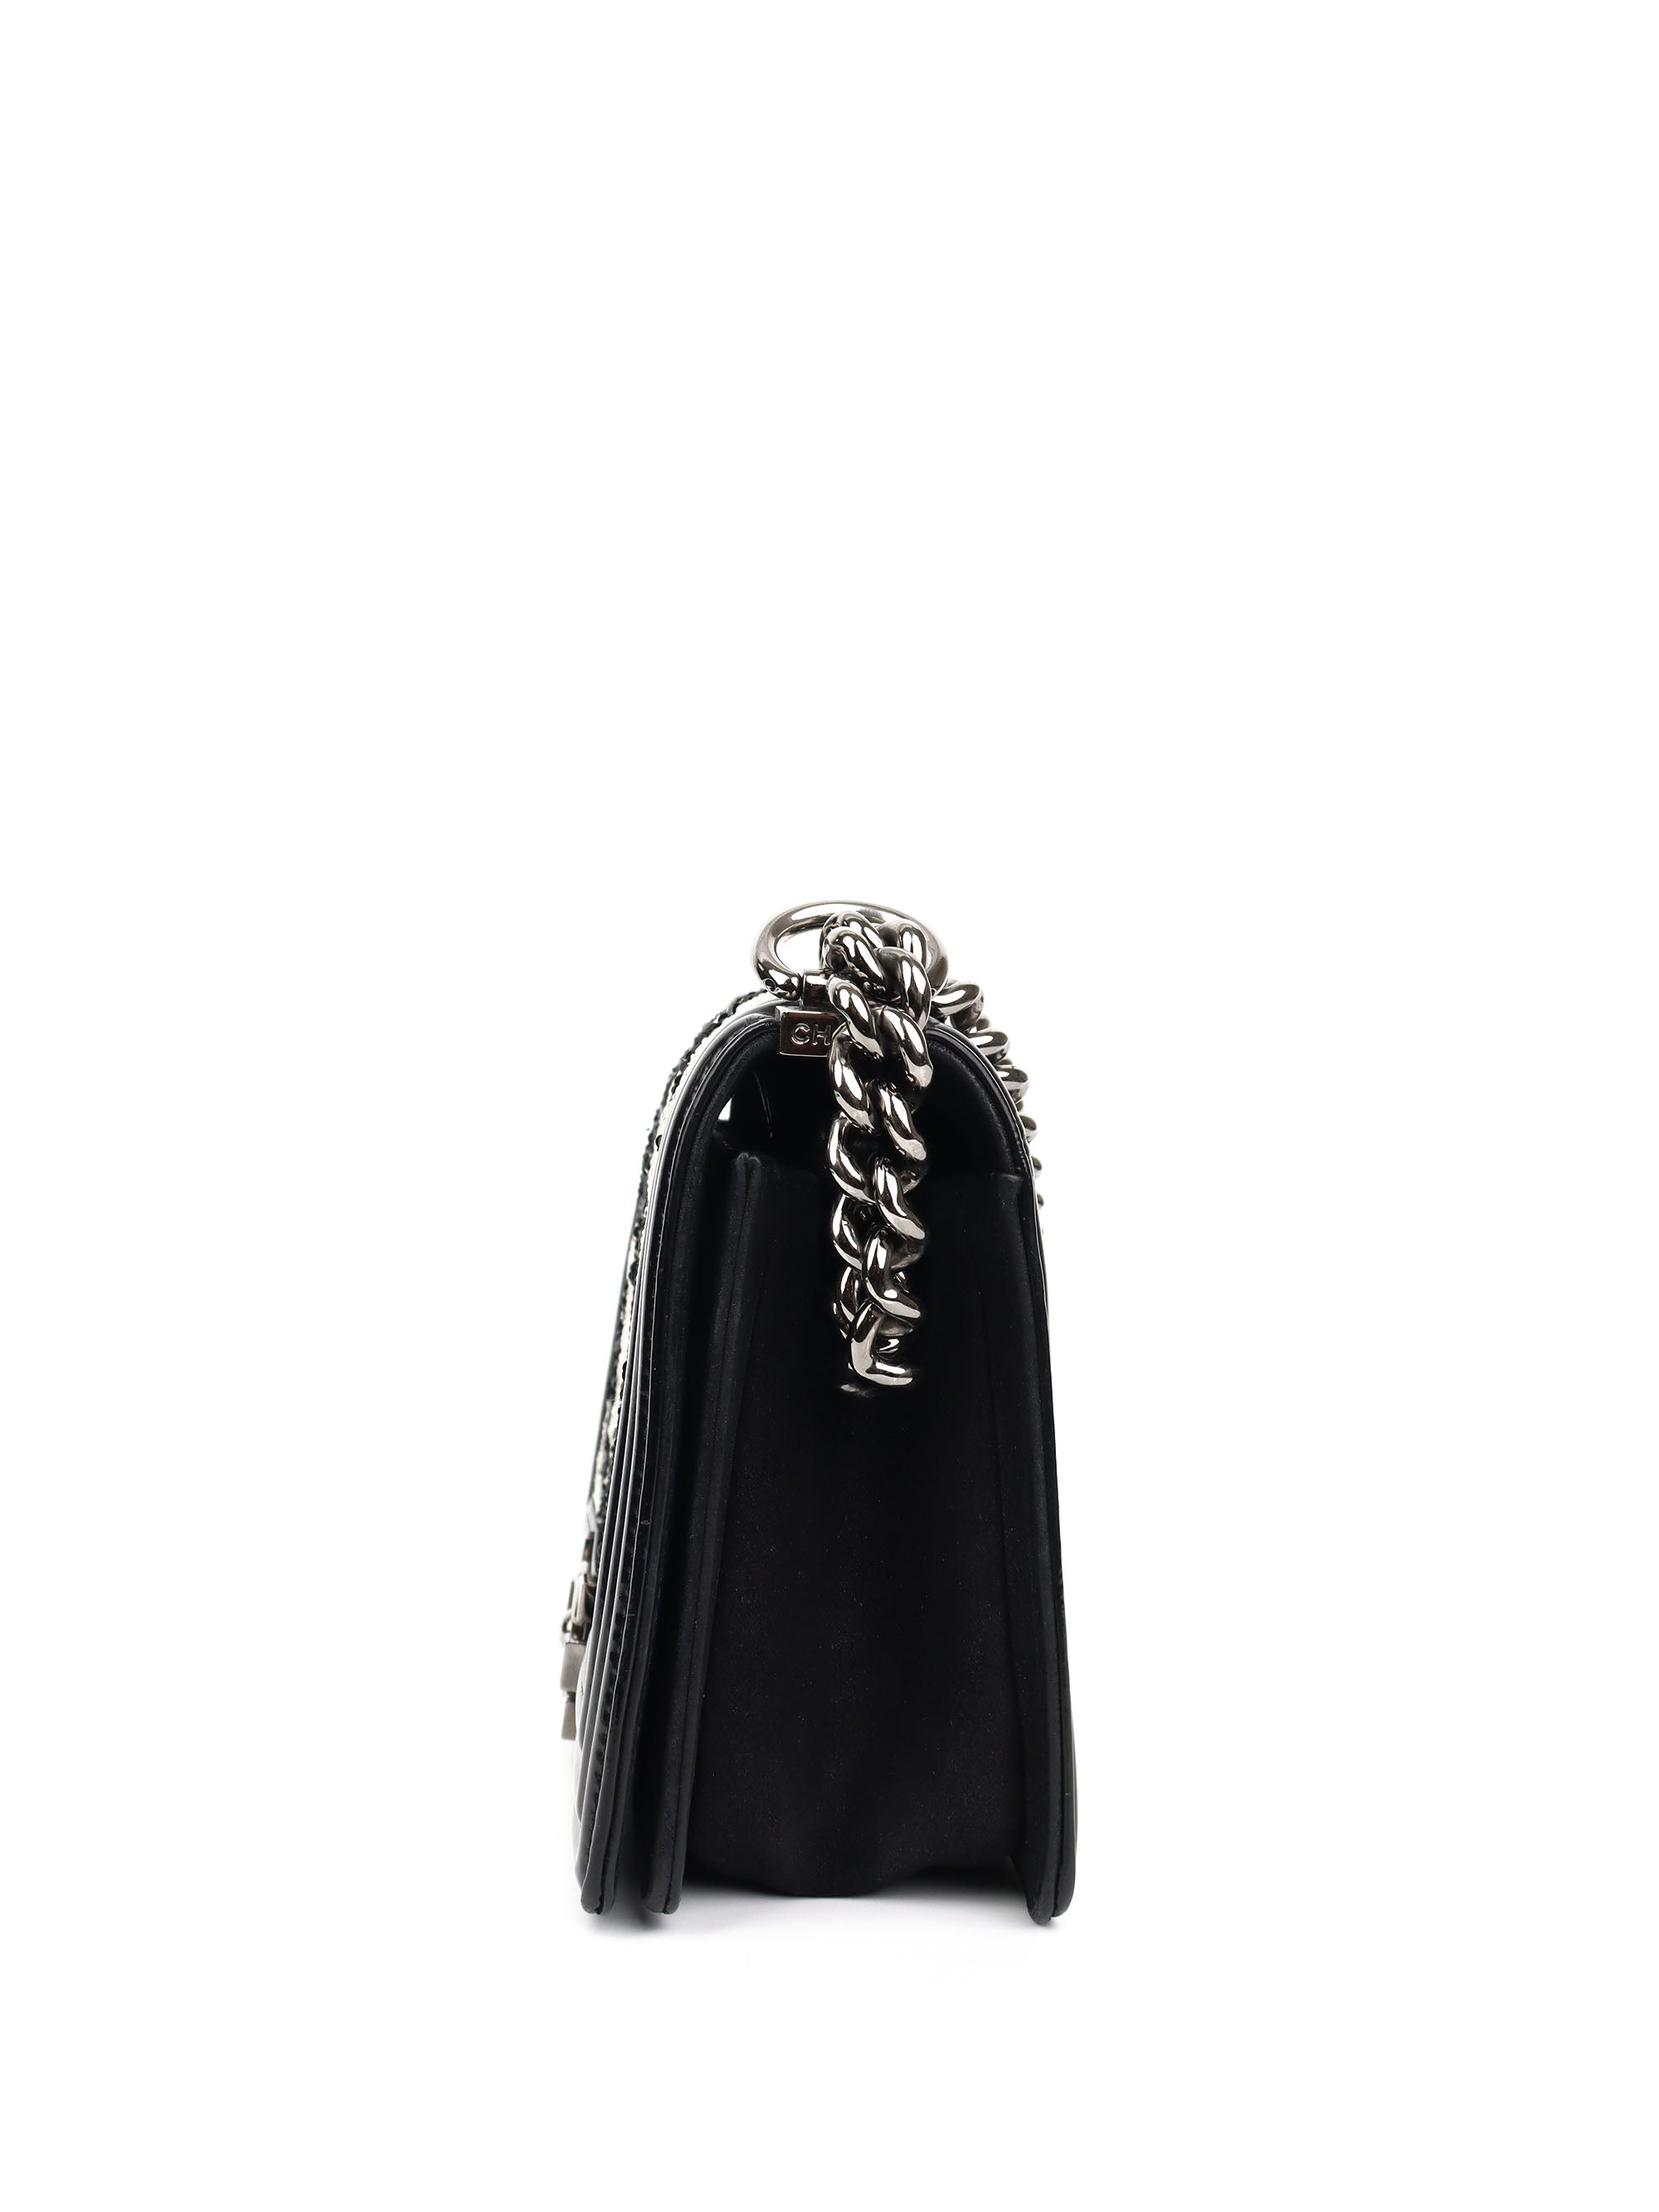 Chanel Black & White Sequin Medium Boy Bag